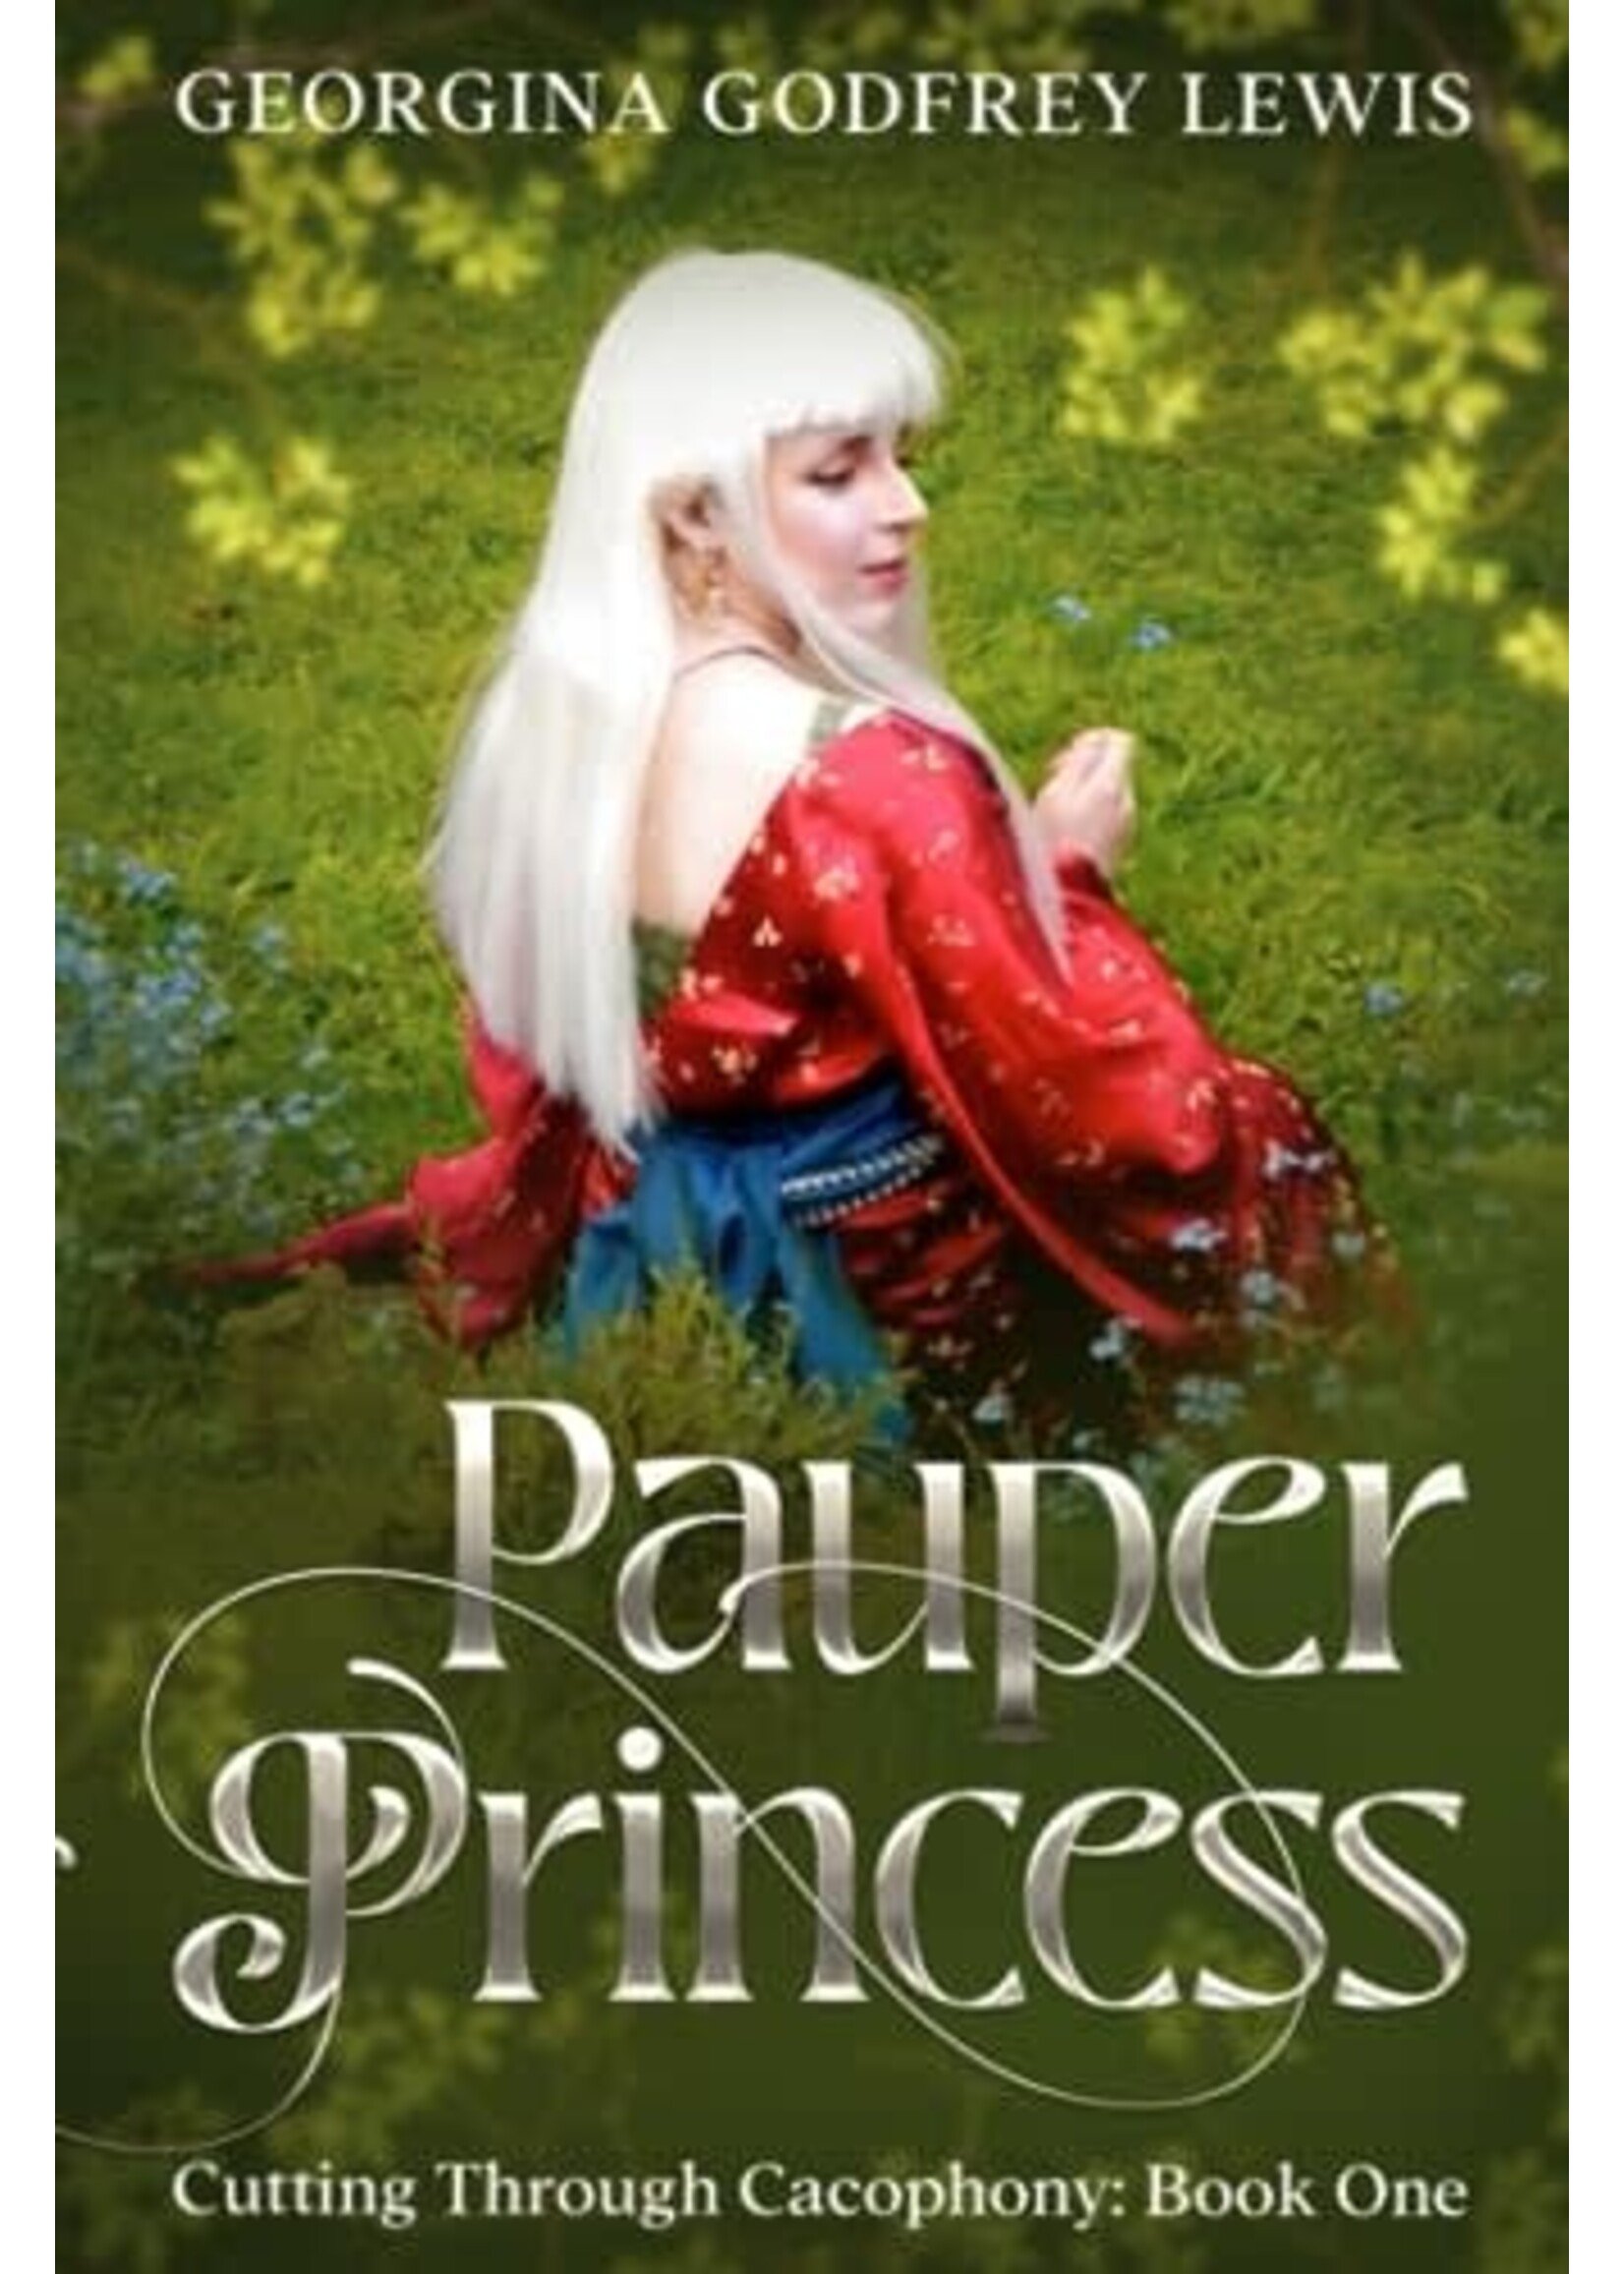 Pauper Princess (Cutting Through Cacophony #1) by Georgina Godfrey Lewis